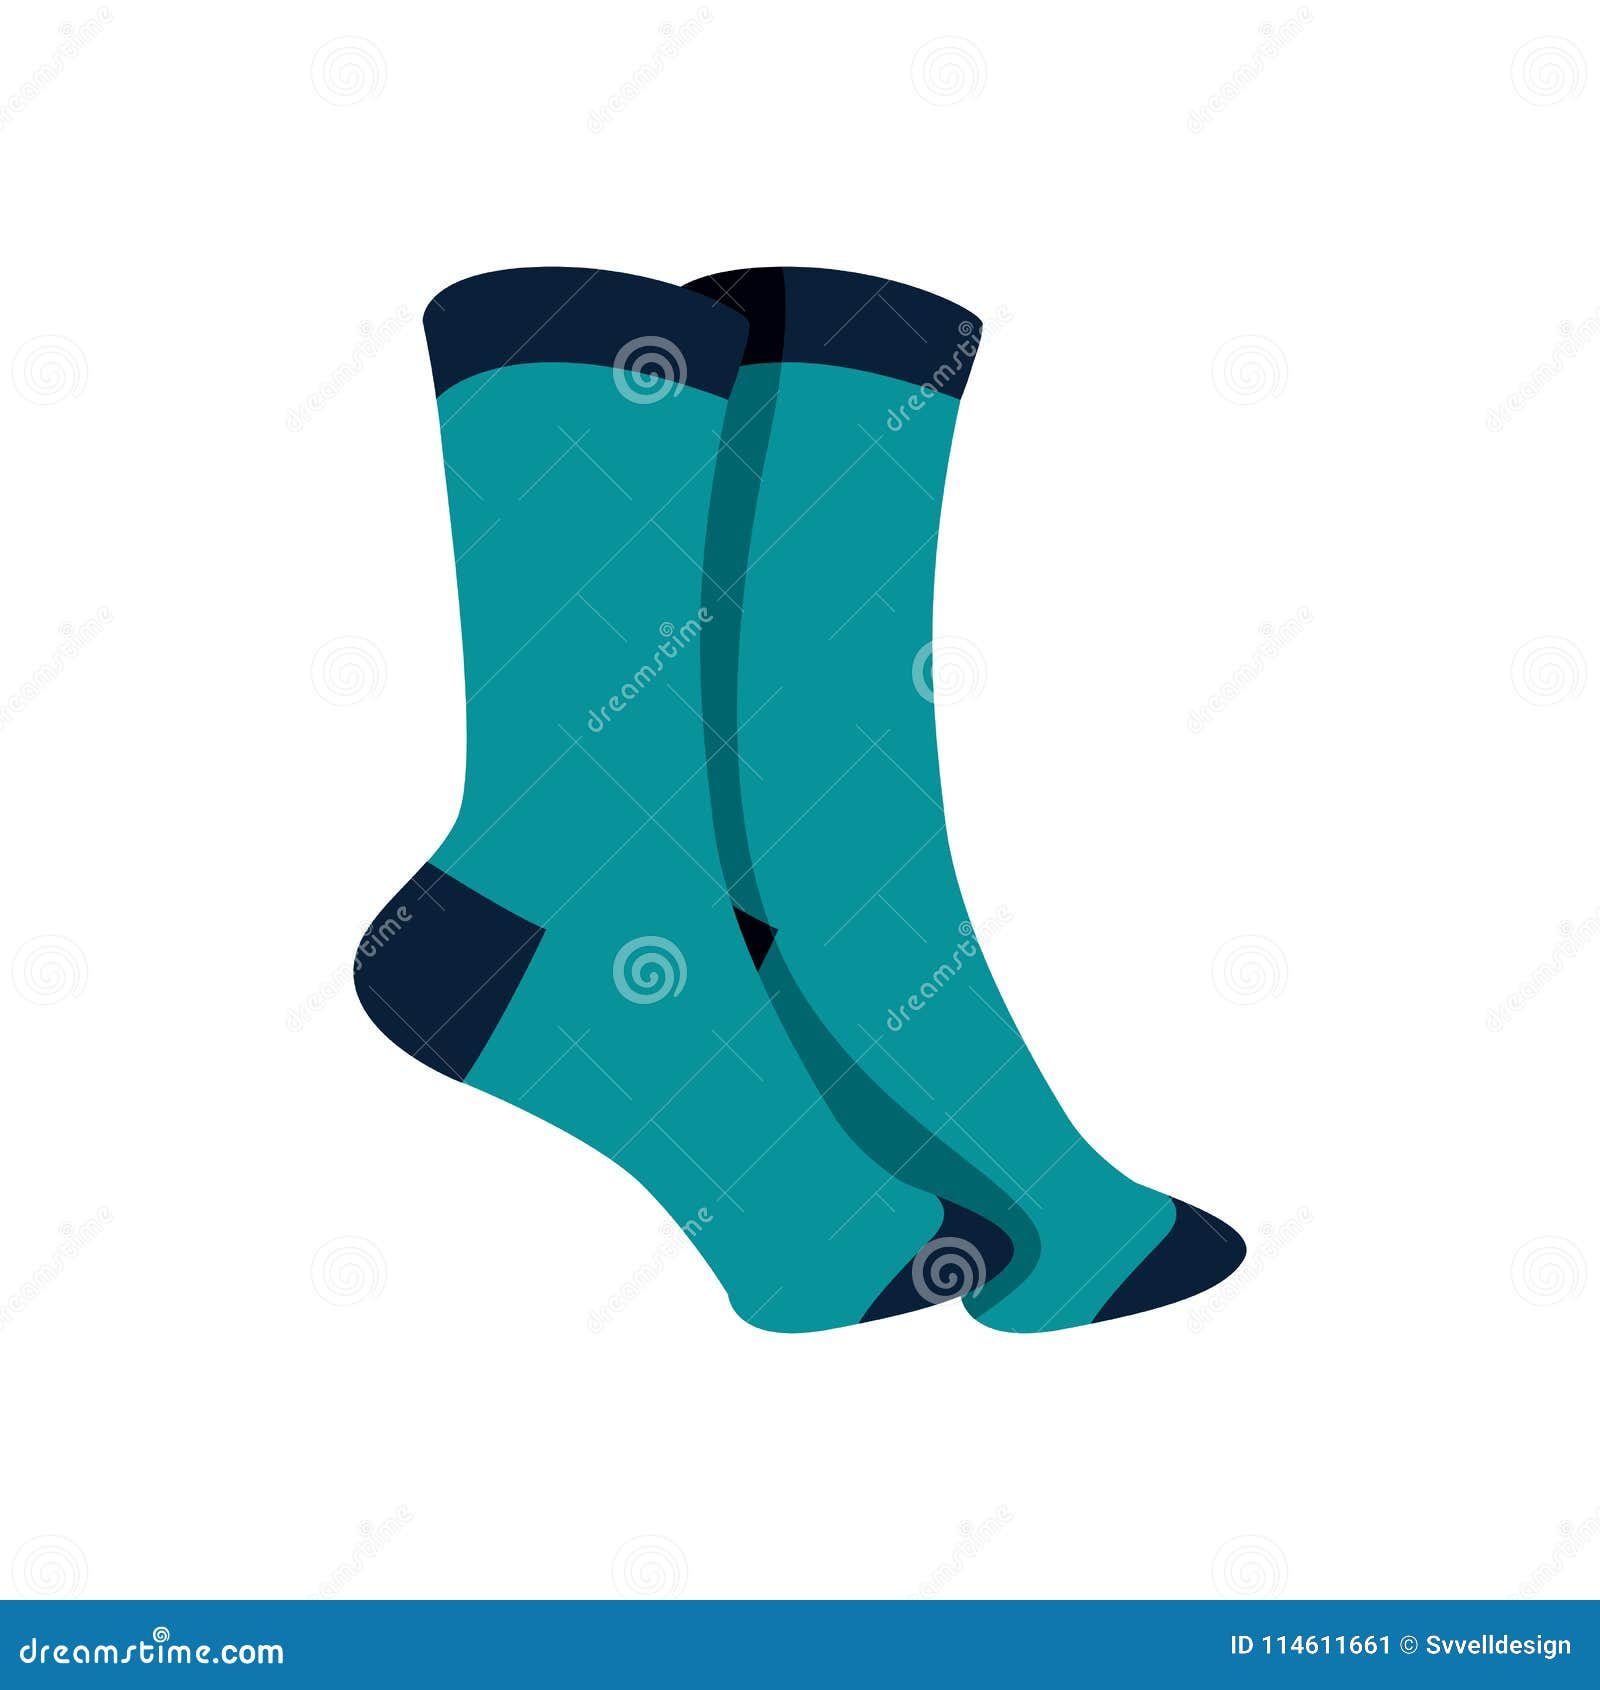 Pair of Blue Socks Fashion Style Item Illustration Stock Vector ...